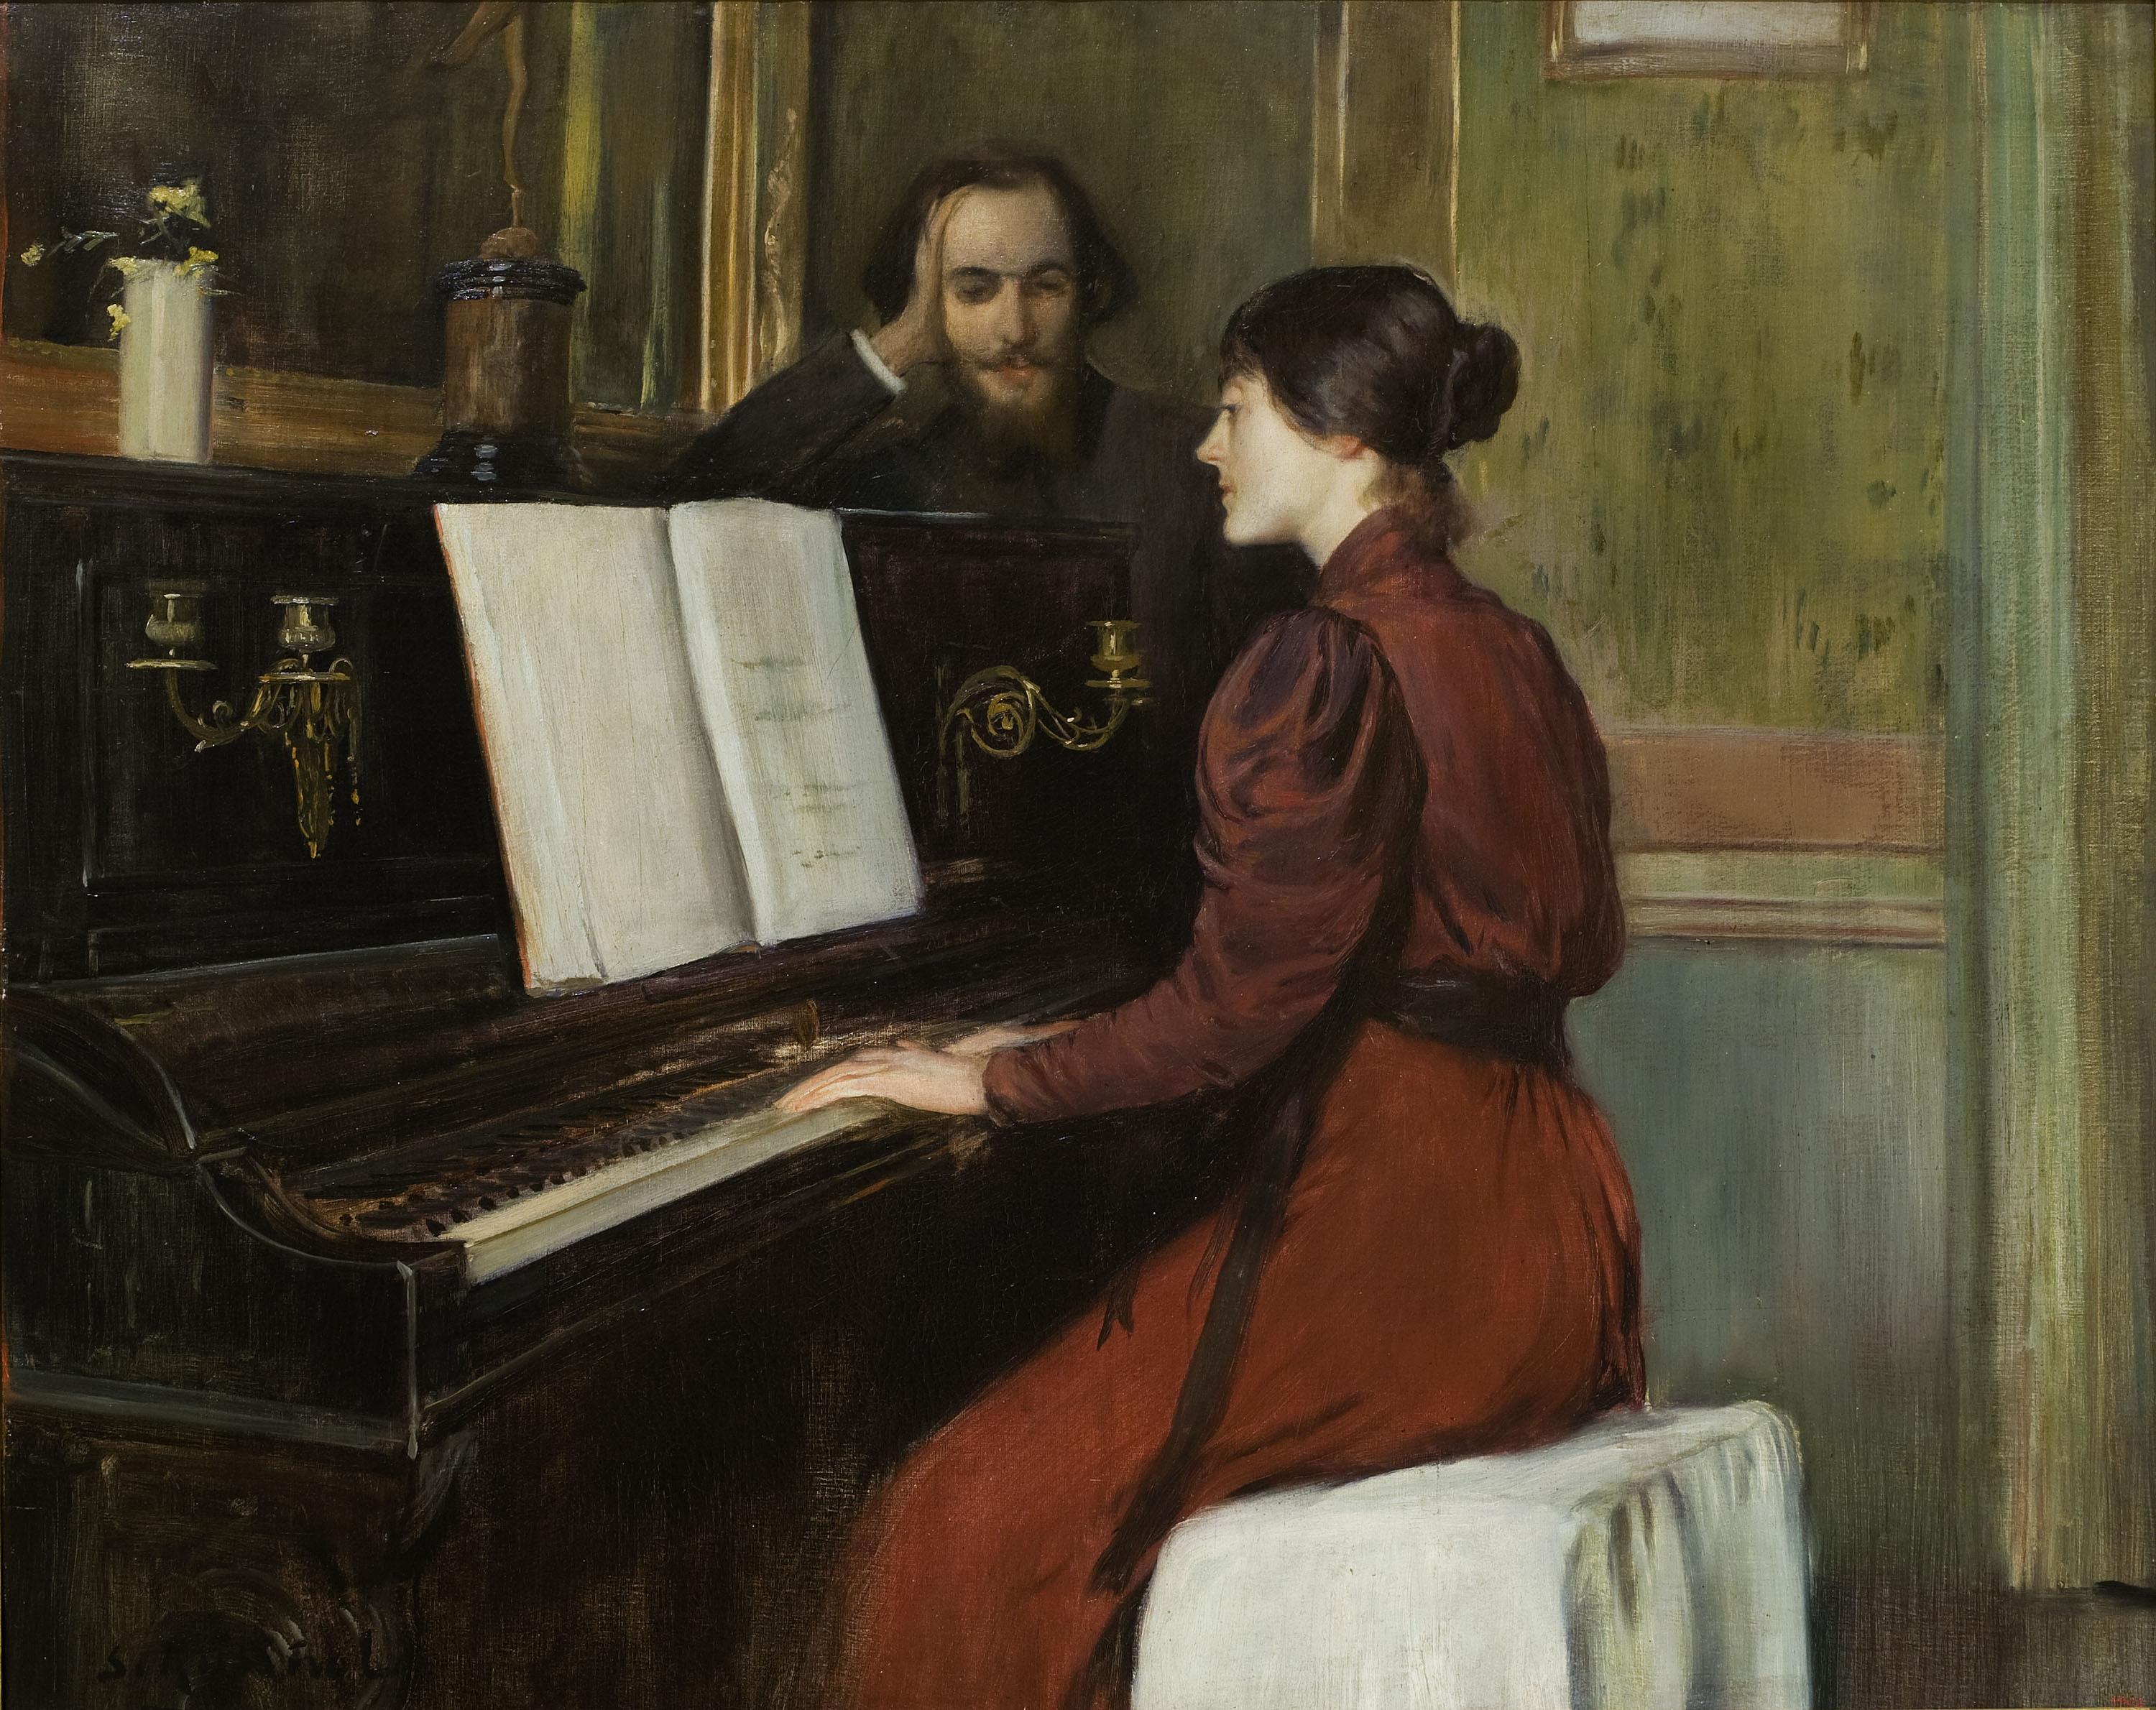 Santiago Rusiñol, Una romança, 1891